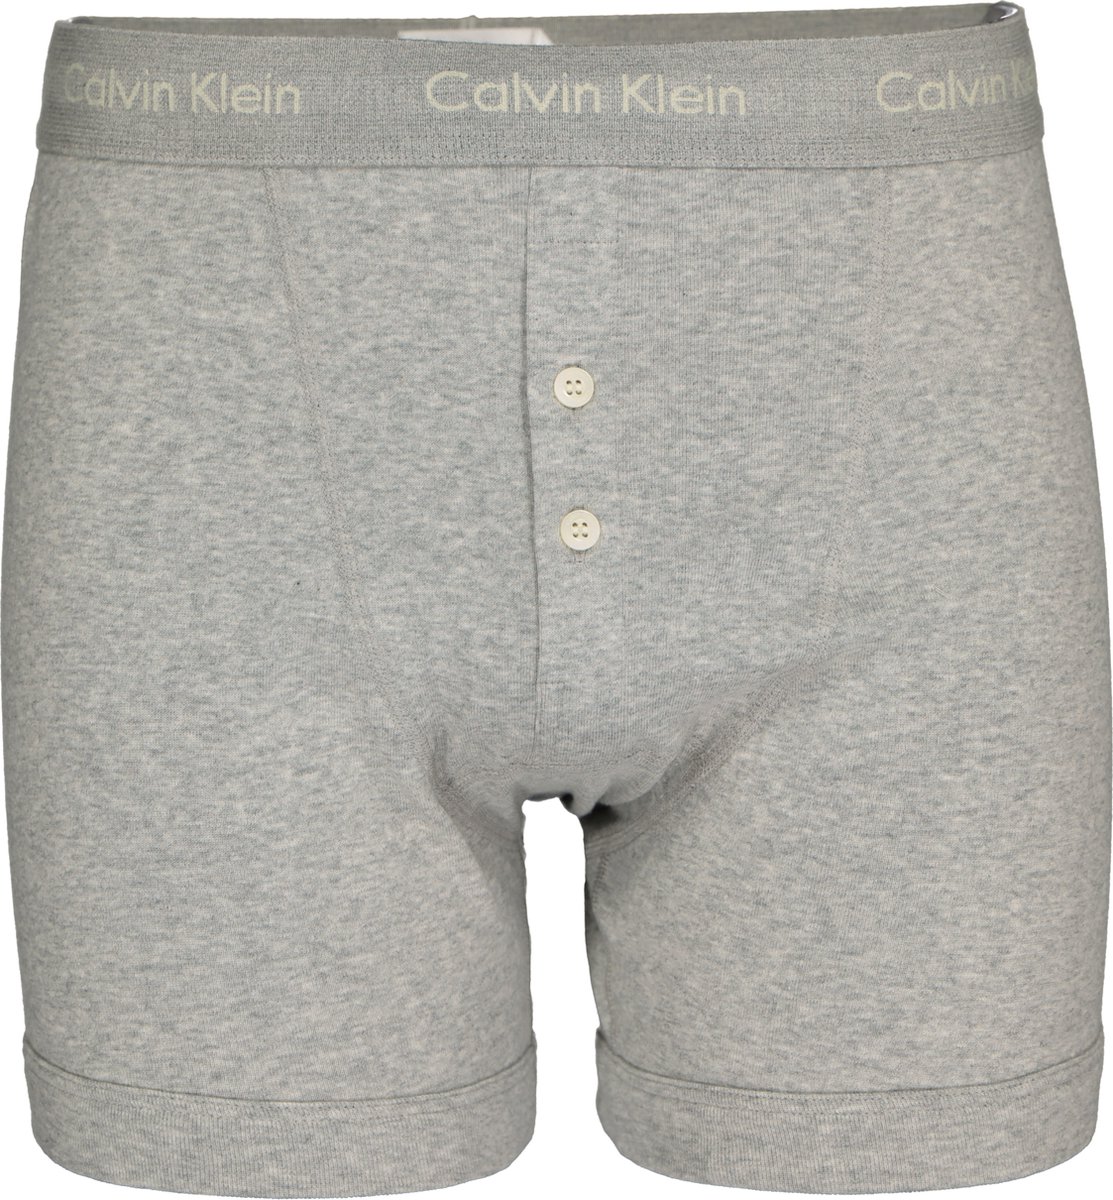 Calvin Klein Cotton boxer brief (1-pack) - heren boxer lang met knoop gulp  - grijs... | bol